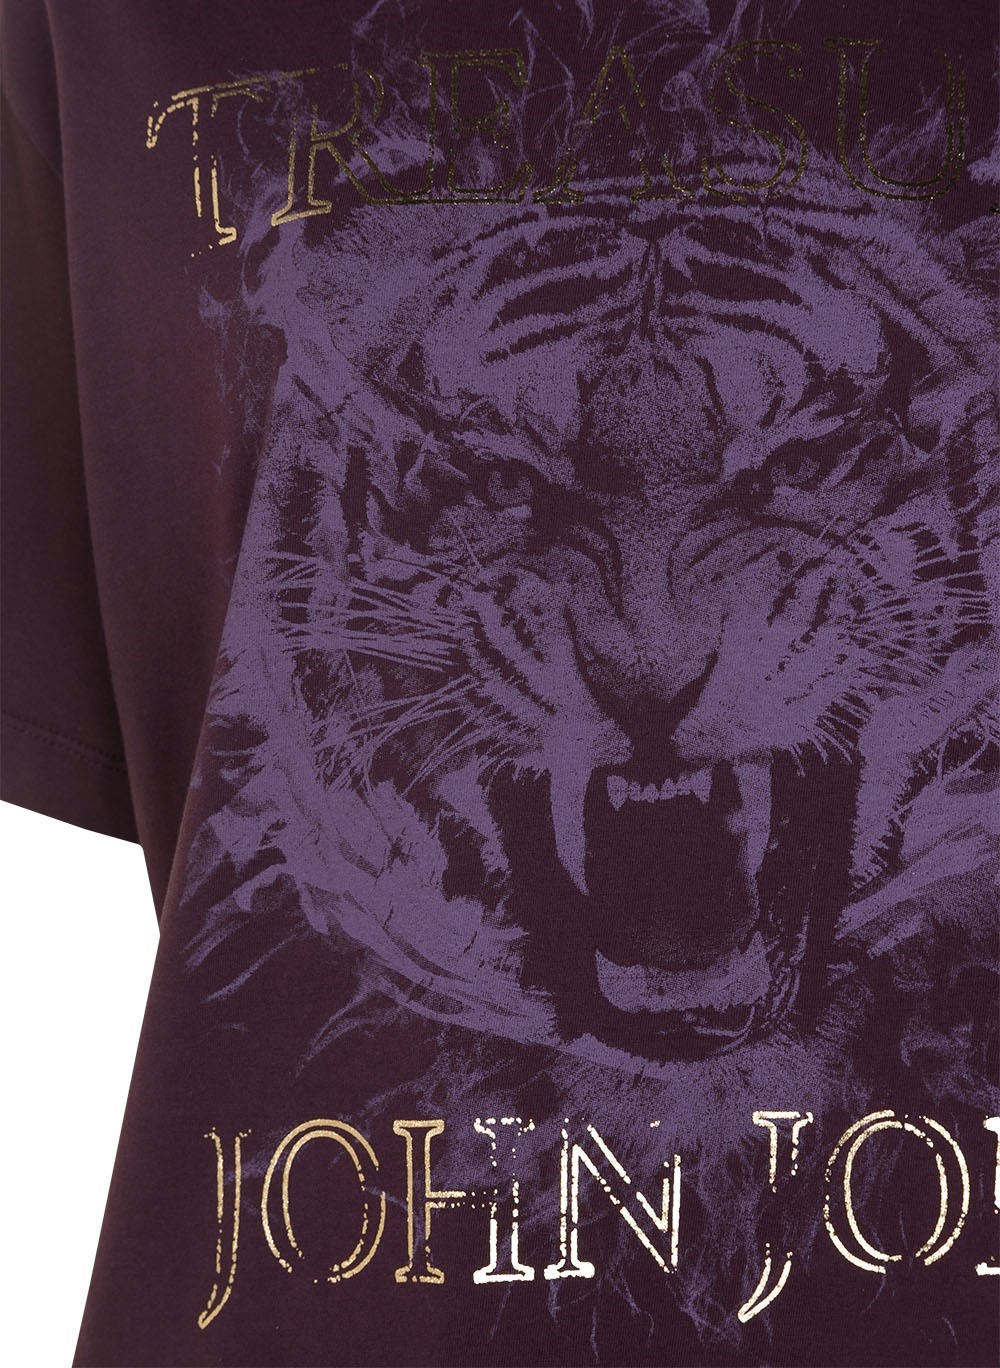 Camiseta John John Real Tiger Feminina 03.02.2155 - Camiseta John John Real  Tiger Feminina - JOHN JOHN FEM